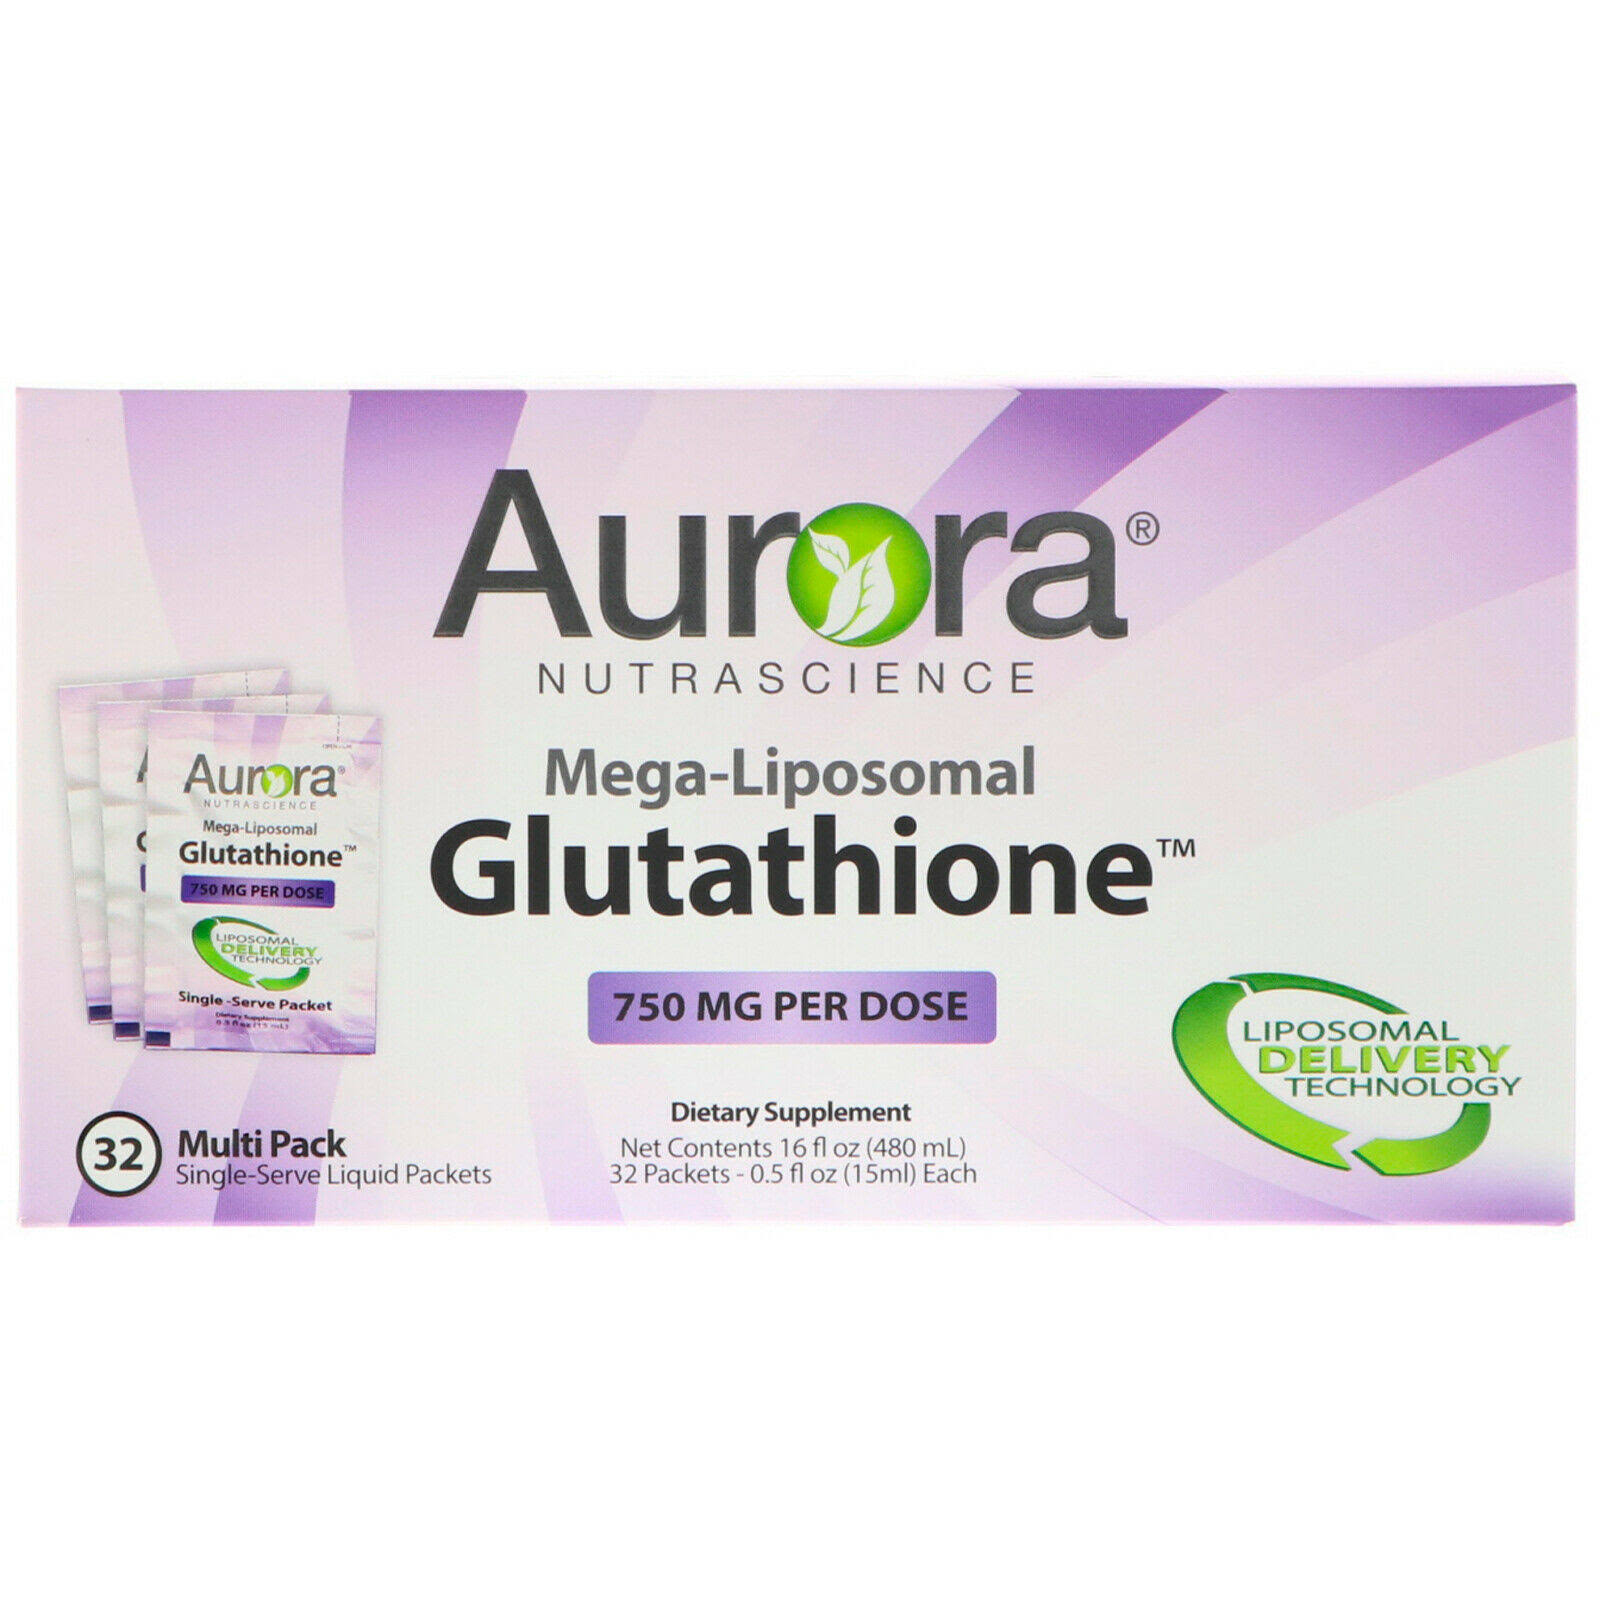 Aurora Nutrascience, Mega-Liposomal Glutathione, 750 mg, 32 Single-Serve Liquid Packets, 0.5 fl oz (15 ml) Each